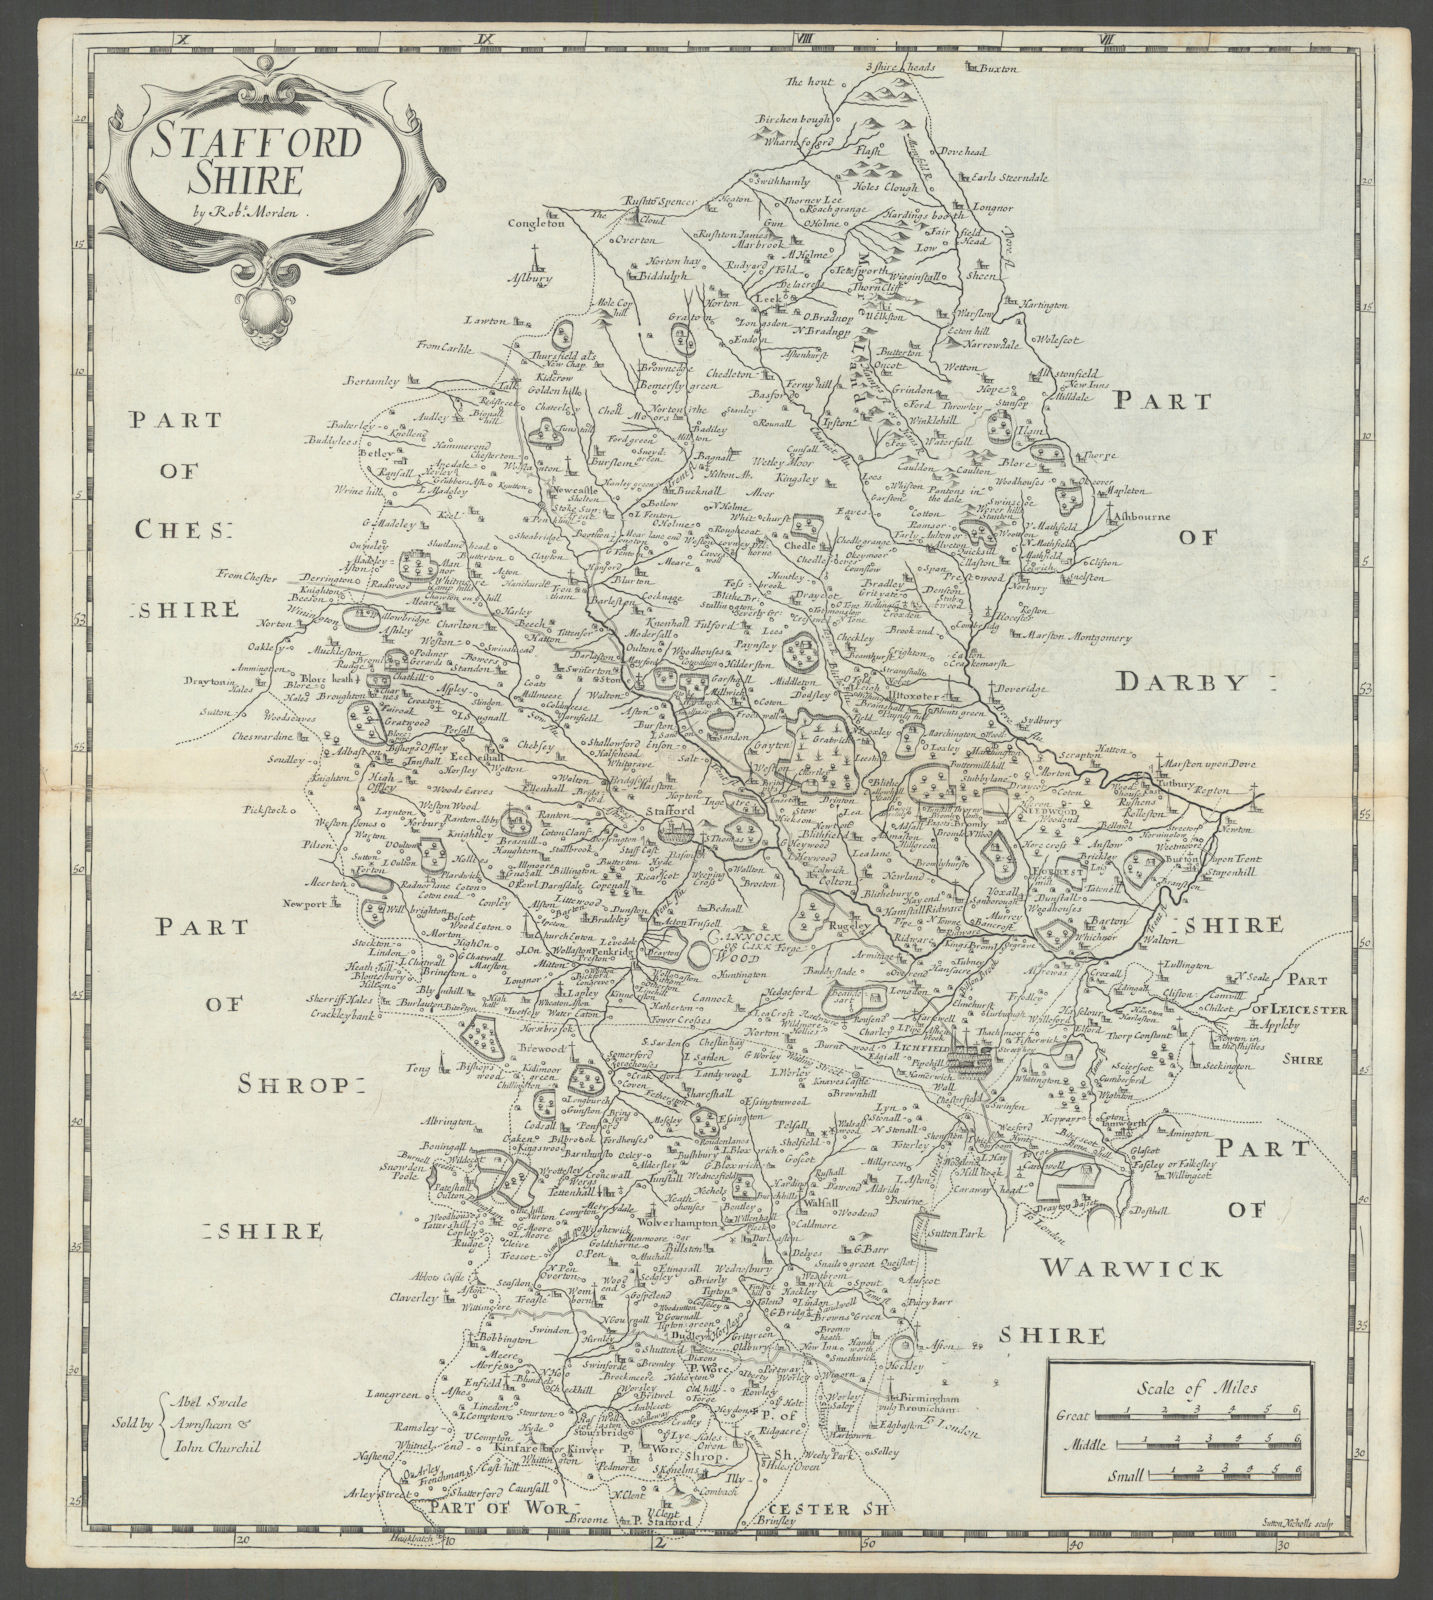 Staffordshire. 'STAFFORD SHIRE' by ROBERT MORDEN. Camden's Britannia 1722 map